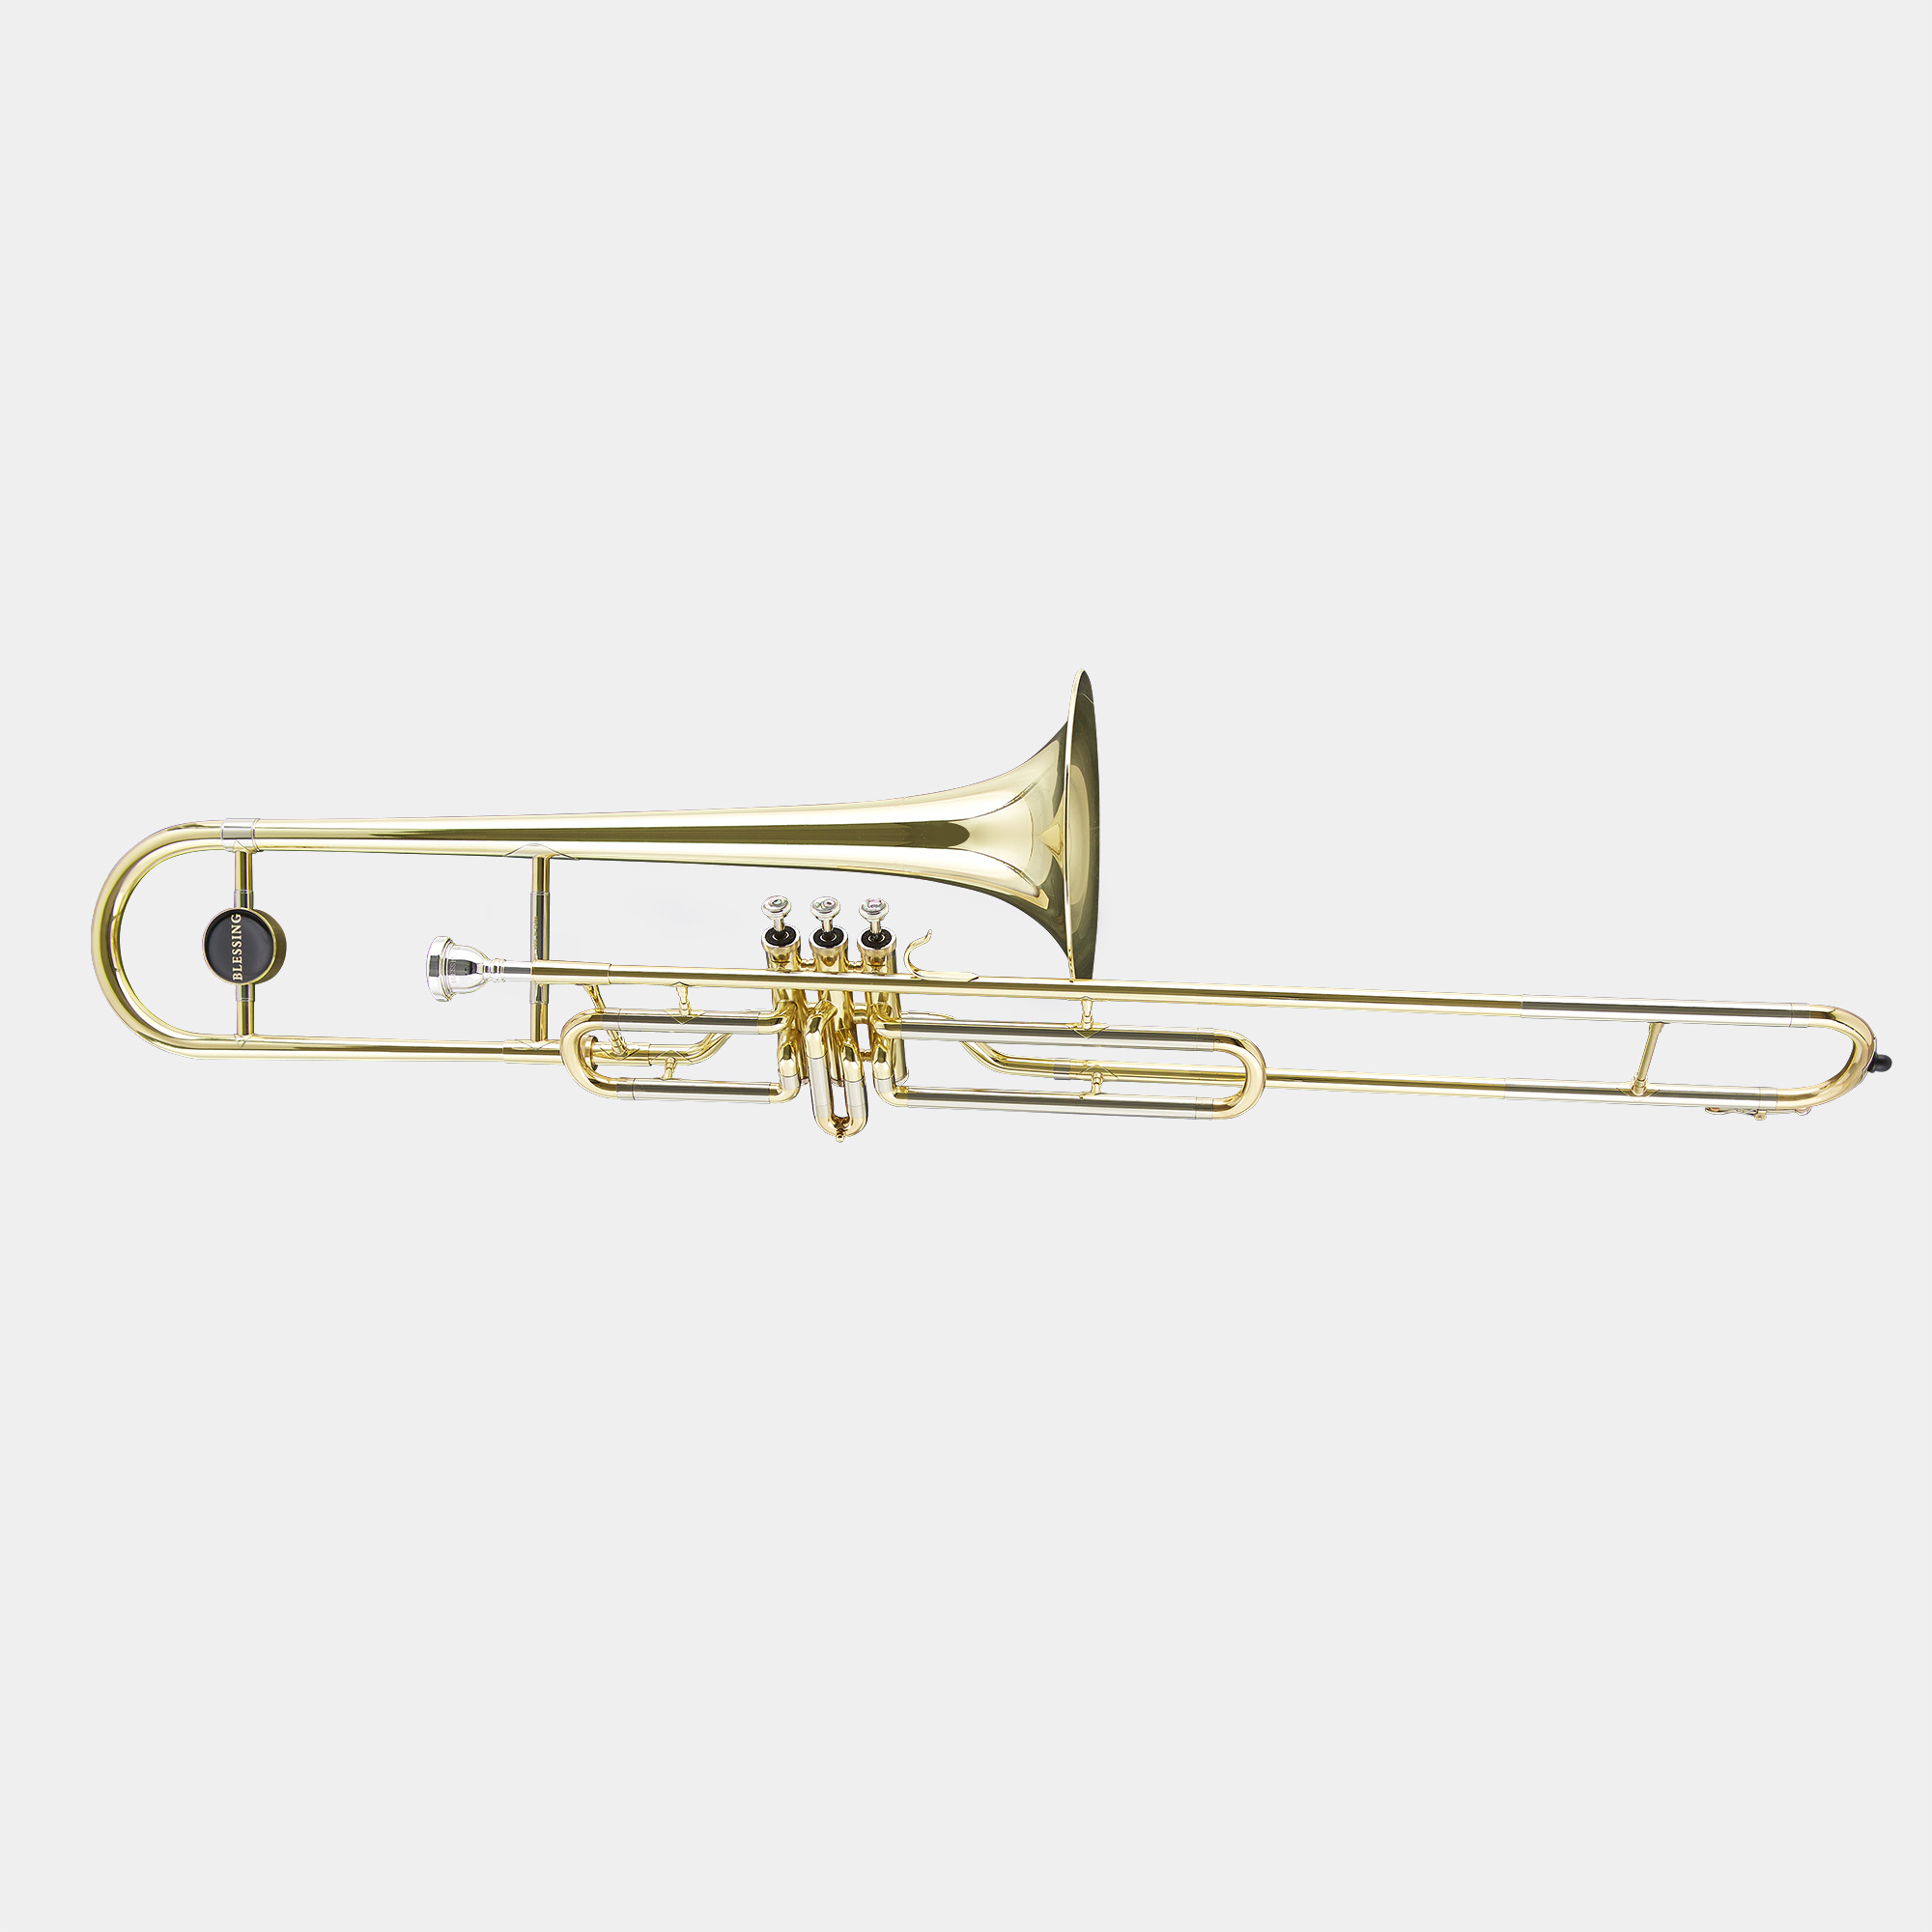 Trumpet, Tuba & Trombone Lessons, Palatine, IL